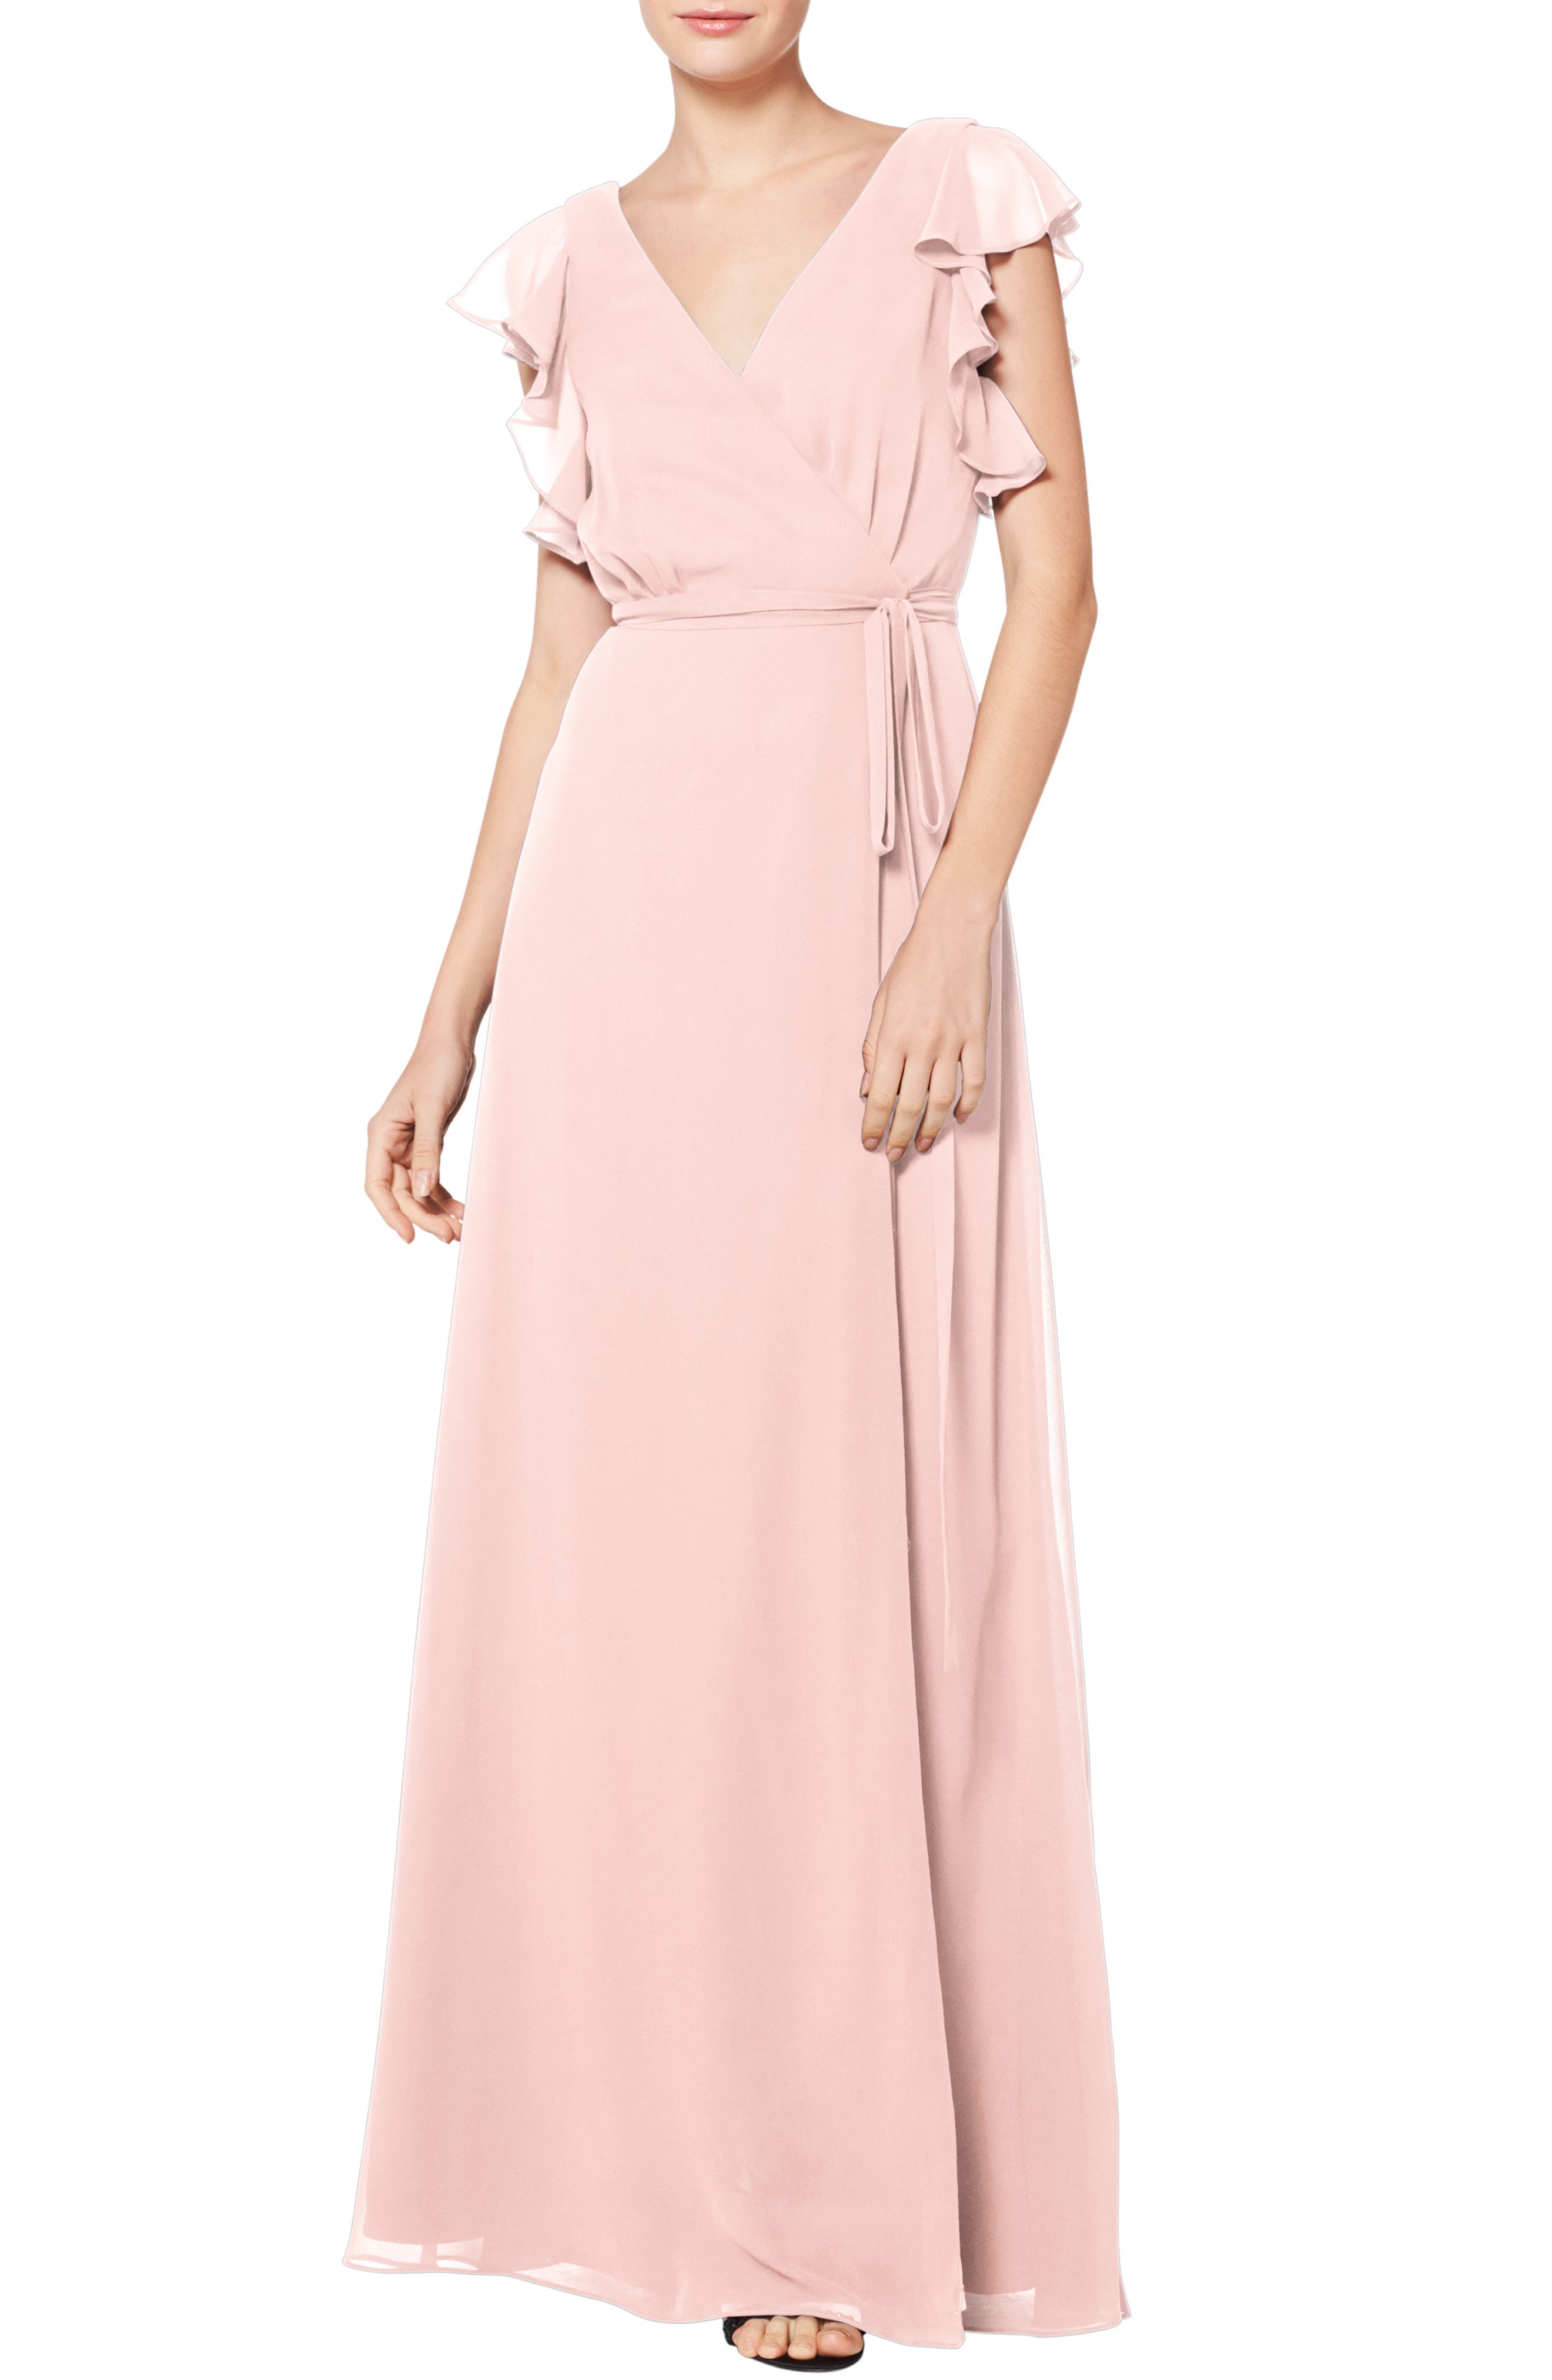 Women's Wrap Formal Dresses \u0026 Evening Gowns | Nordstrom